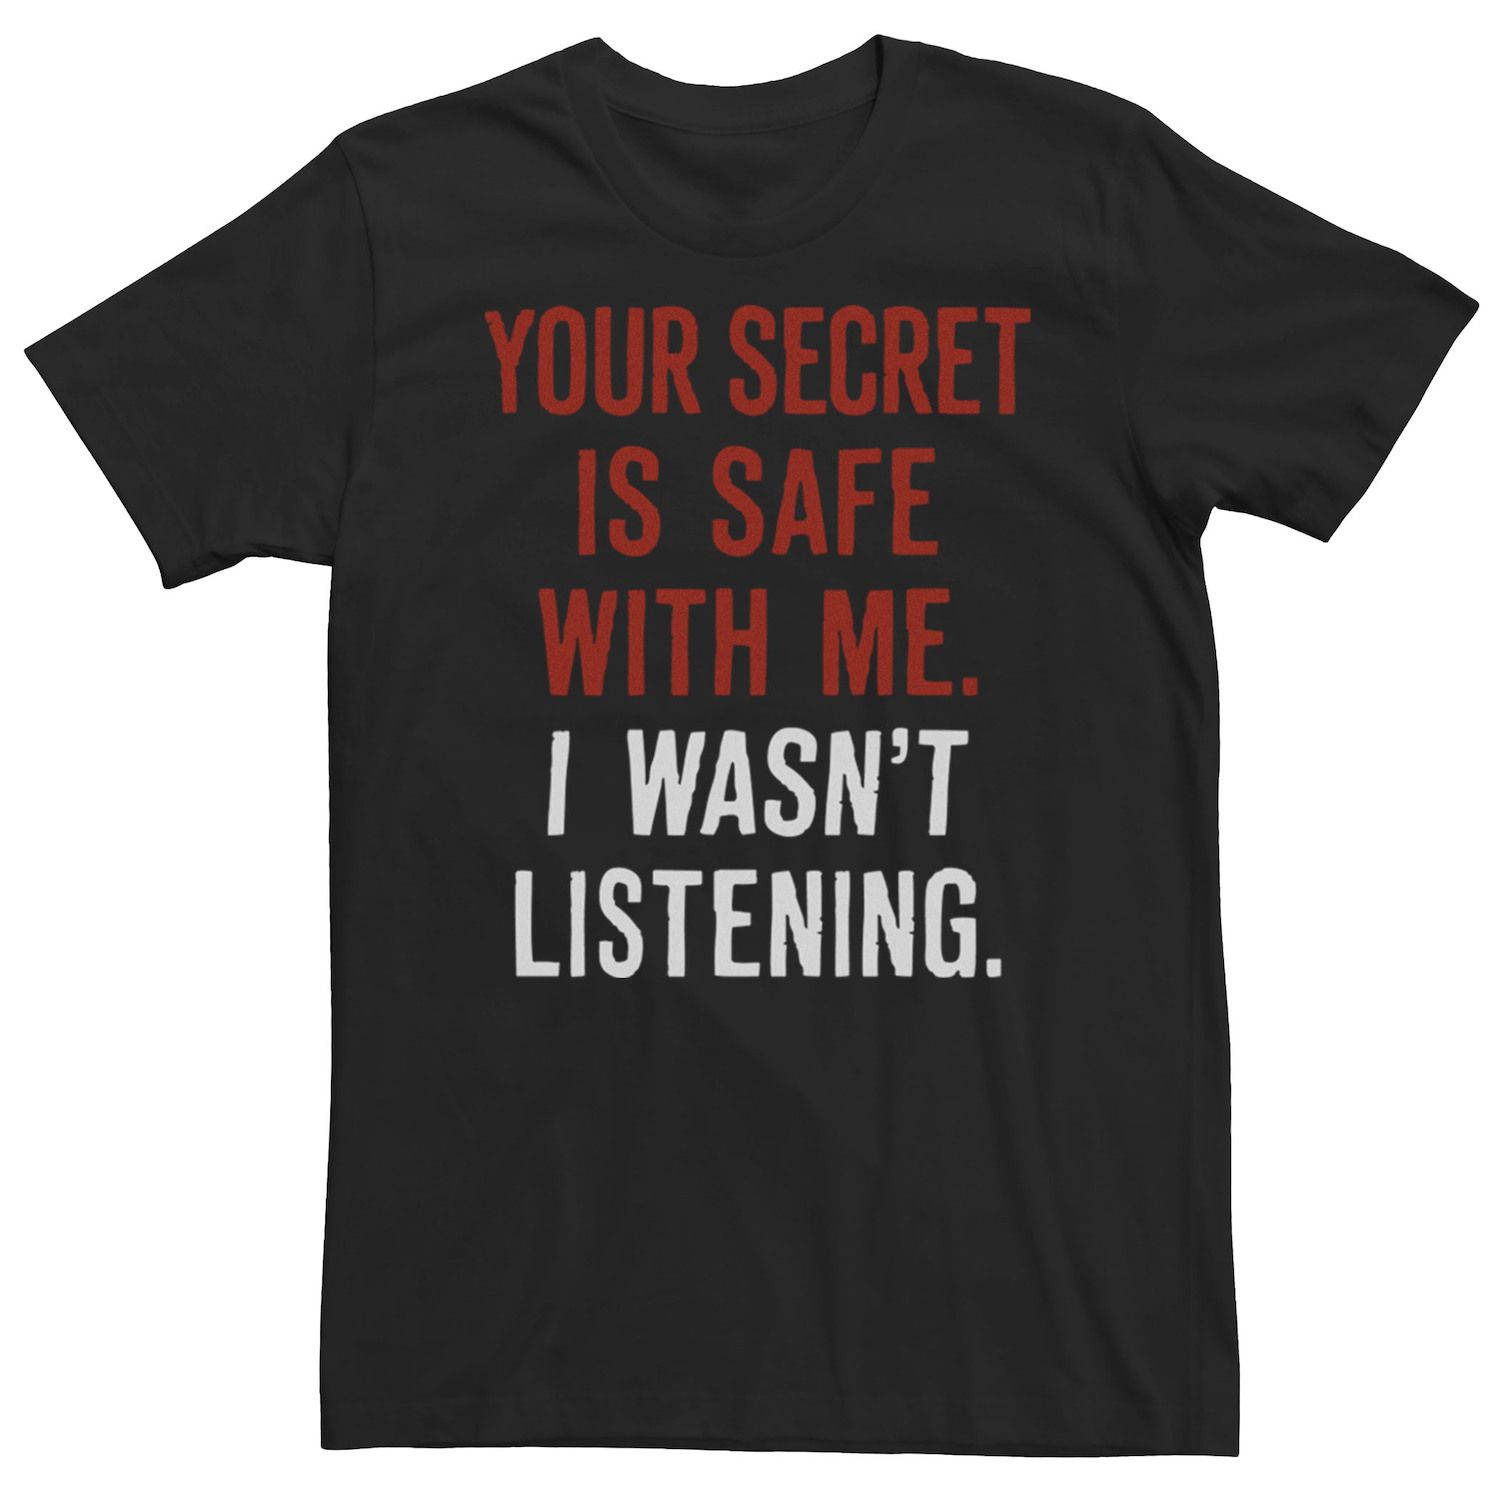 Мужская универсальная футболка с надписью Your Secret Humor Licensed Character